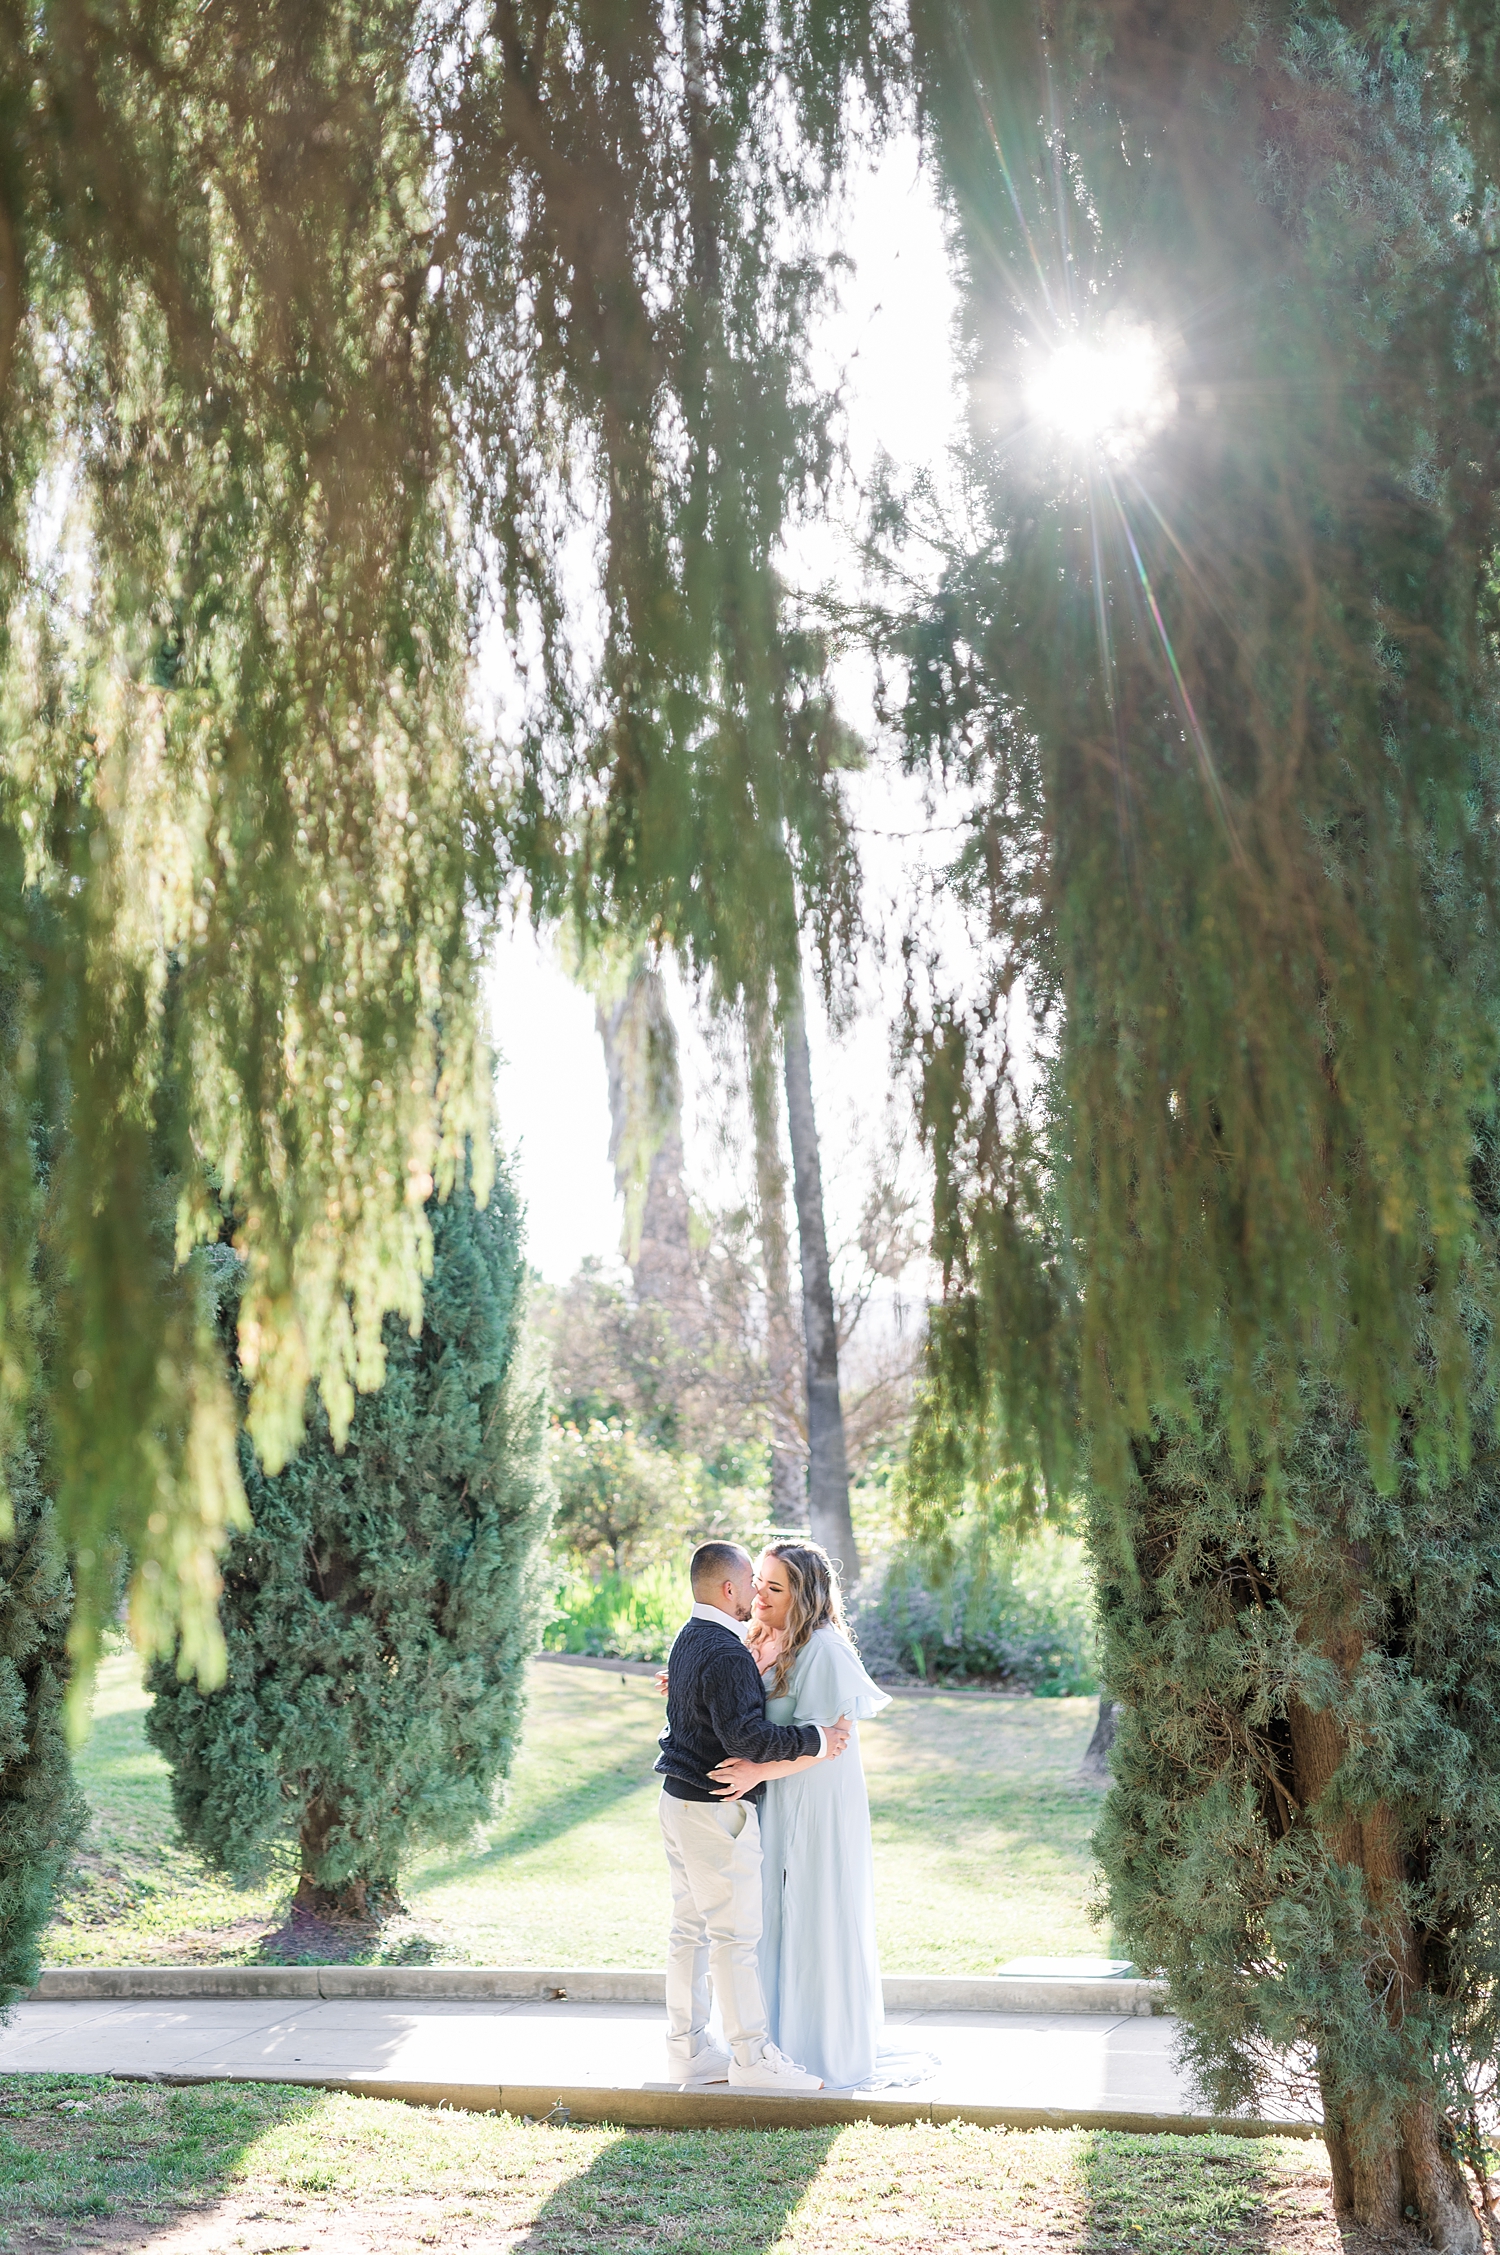 Kimberly Crest House & Gardens Engagement Session | Wedding Photographer -304.jpg